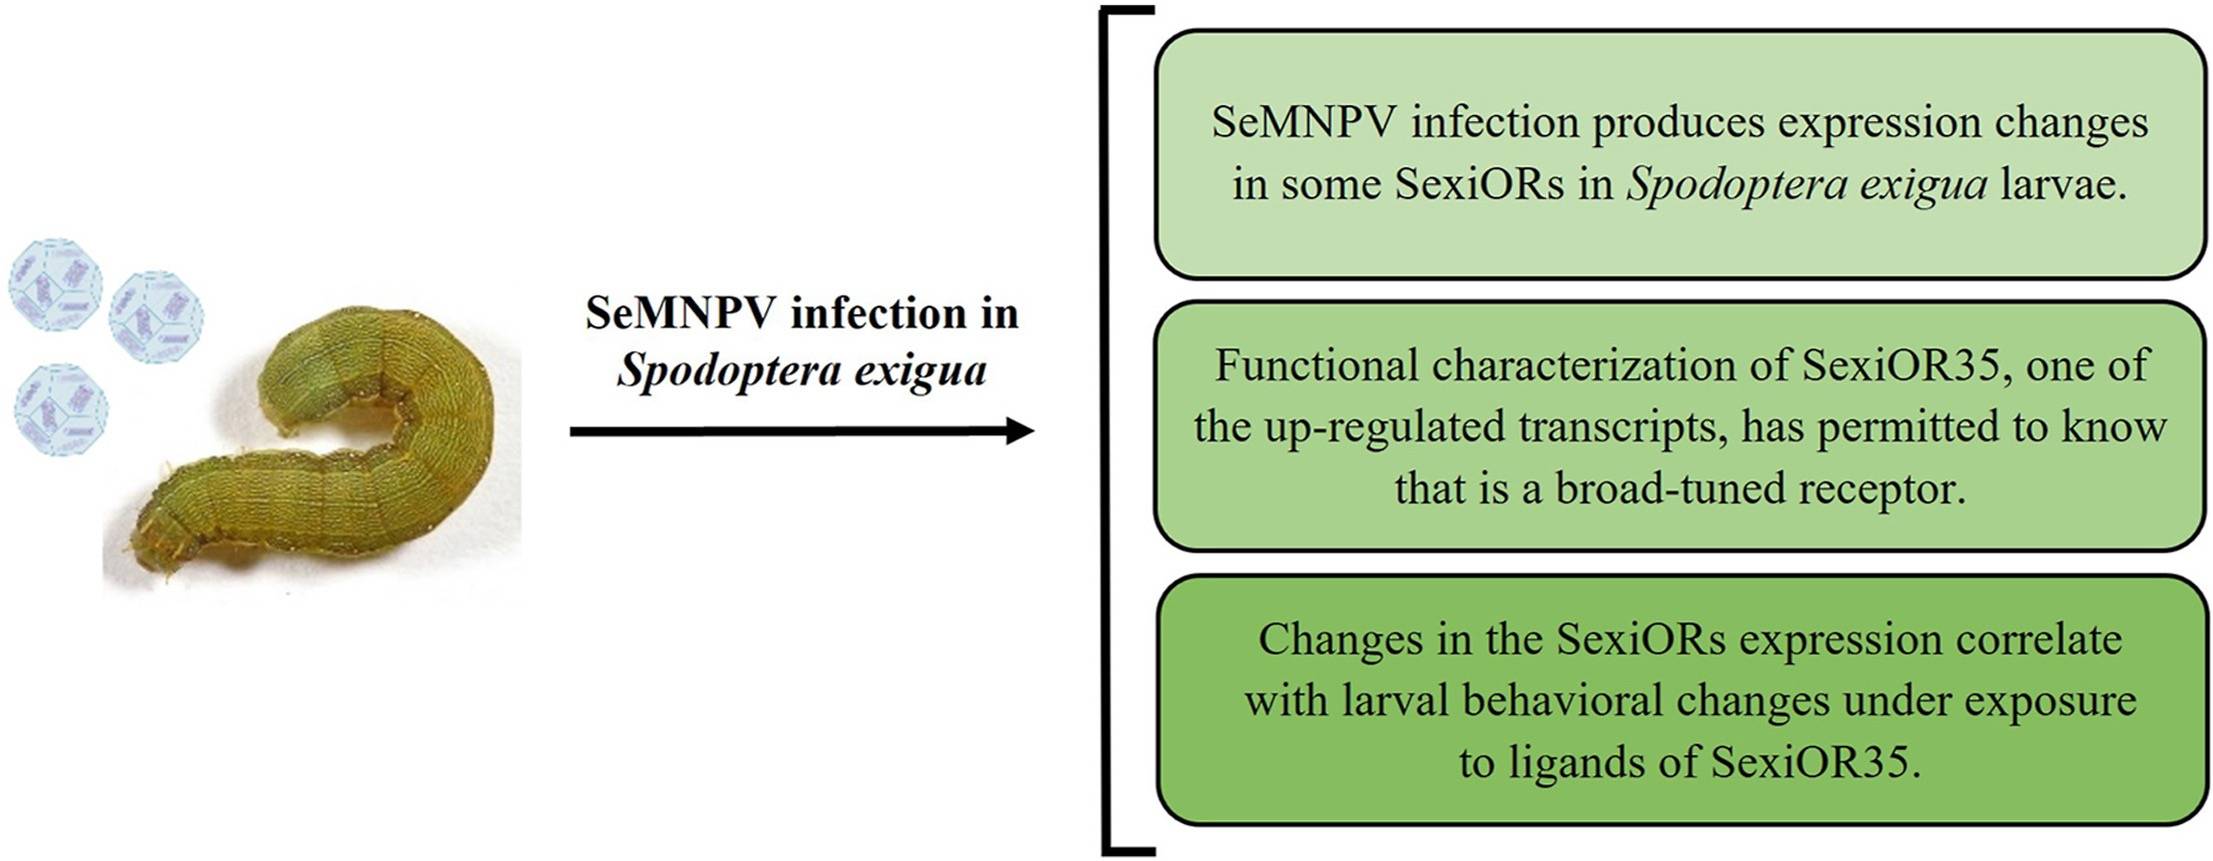 SeMNPV infection in Spodoptera exigua.